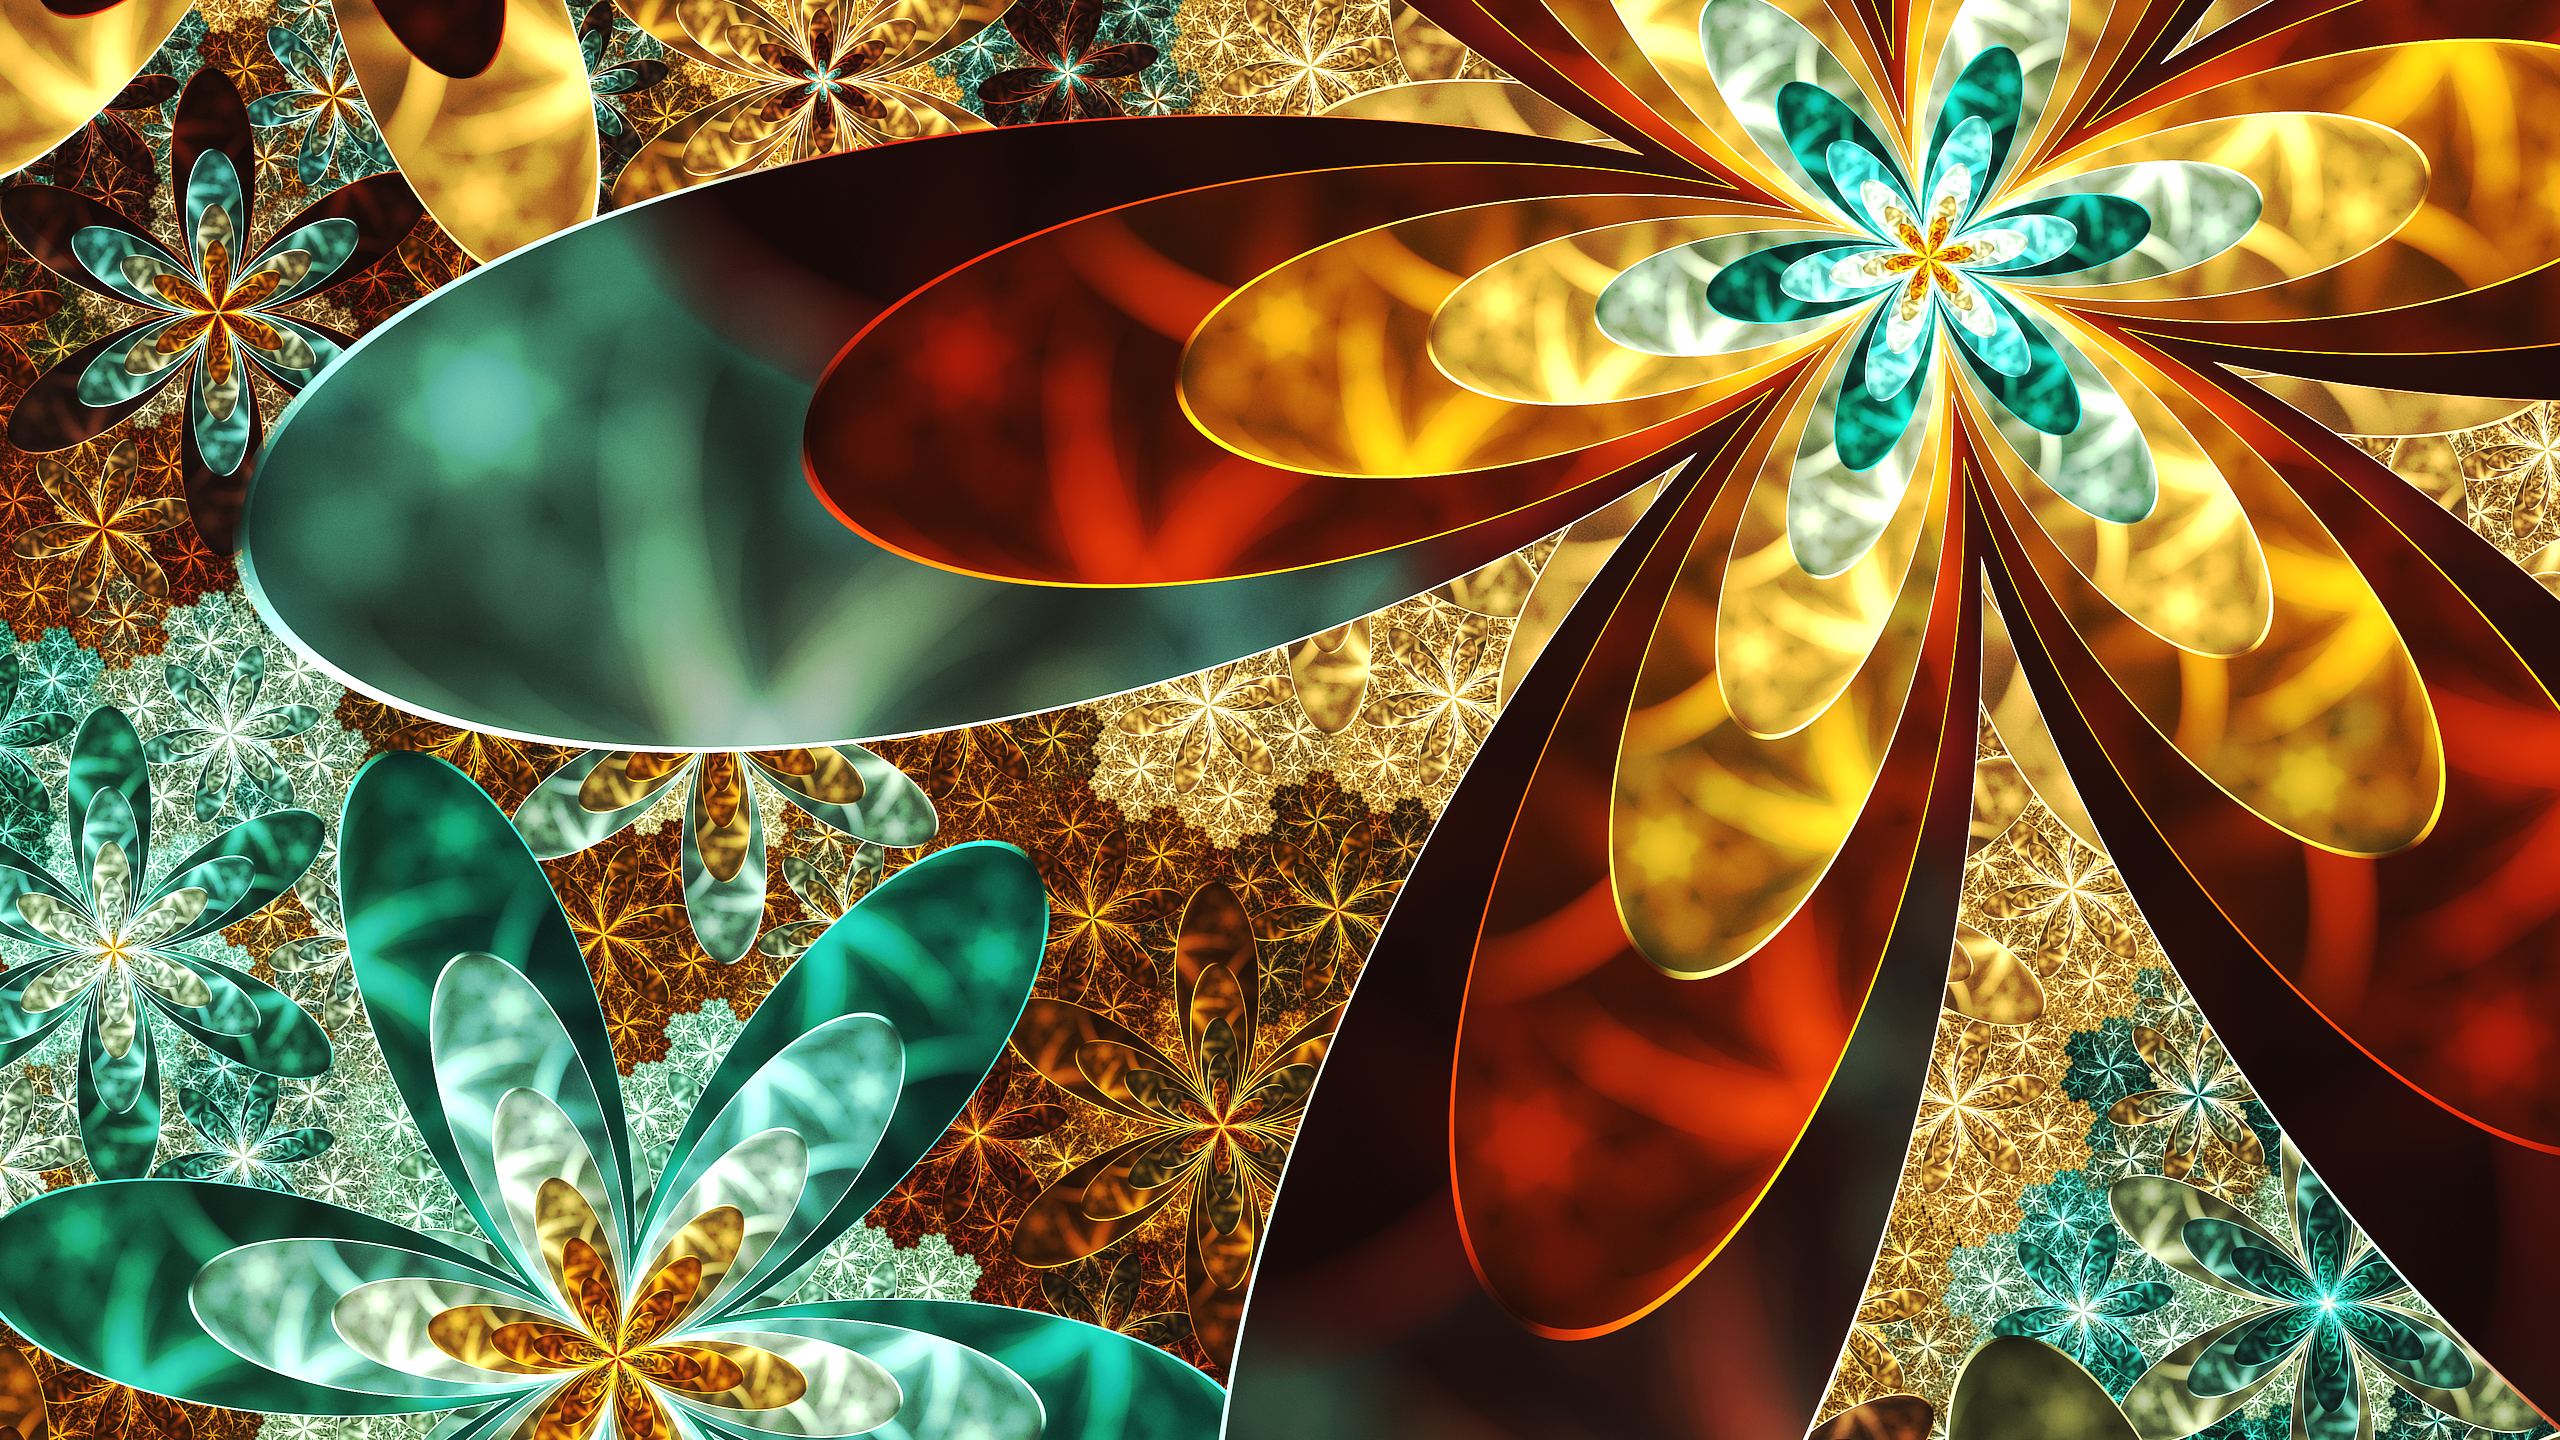 Abstract Artistic Colors Digital Art Flower Fractal 2560x1440